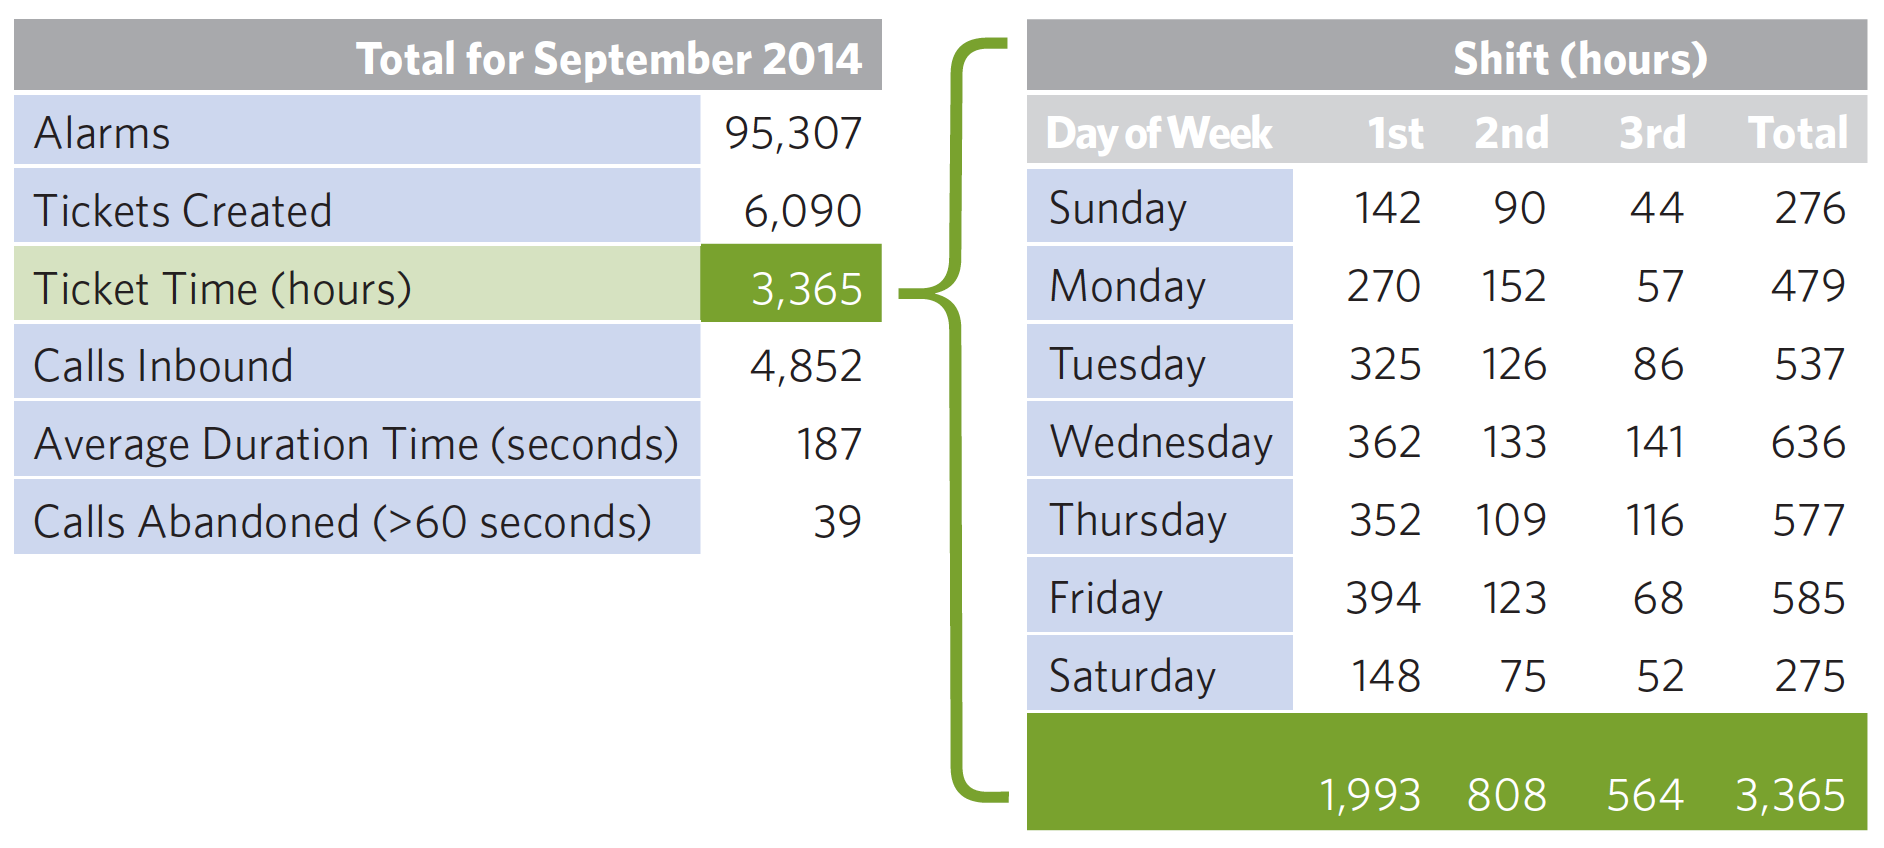 noc utilization metrics for september